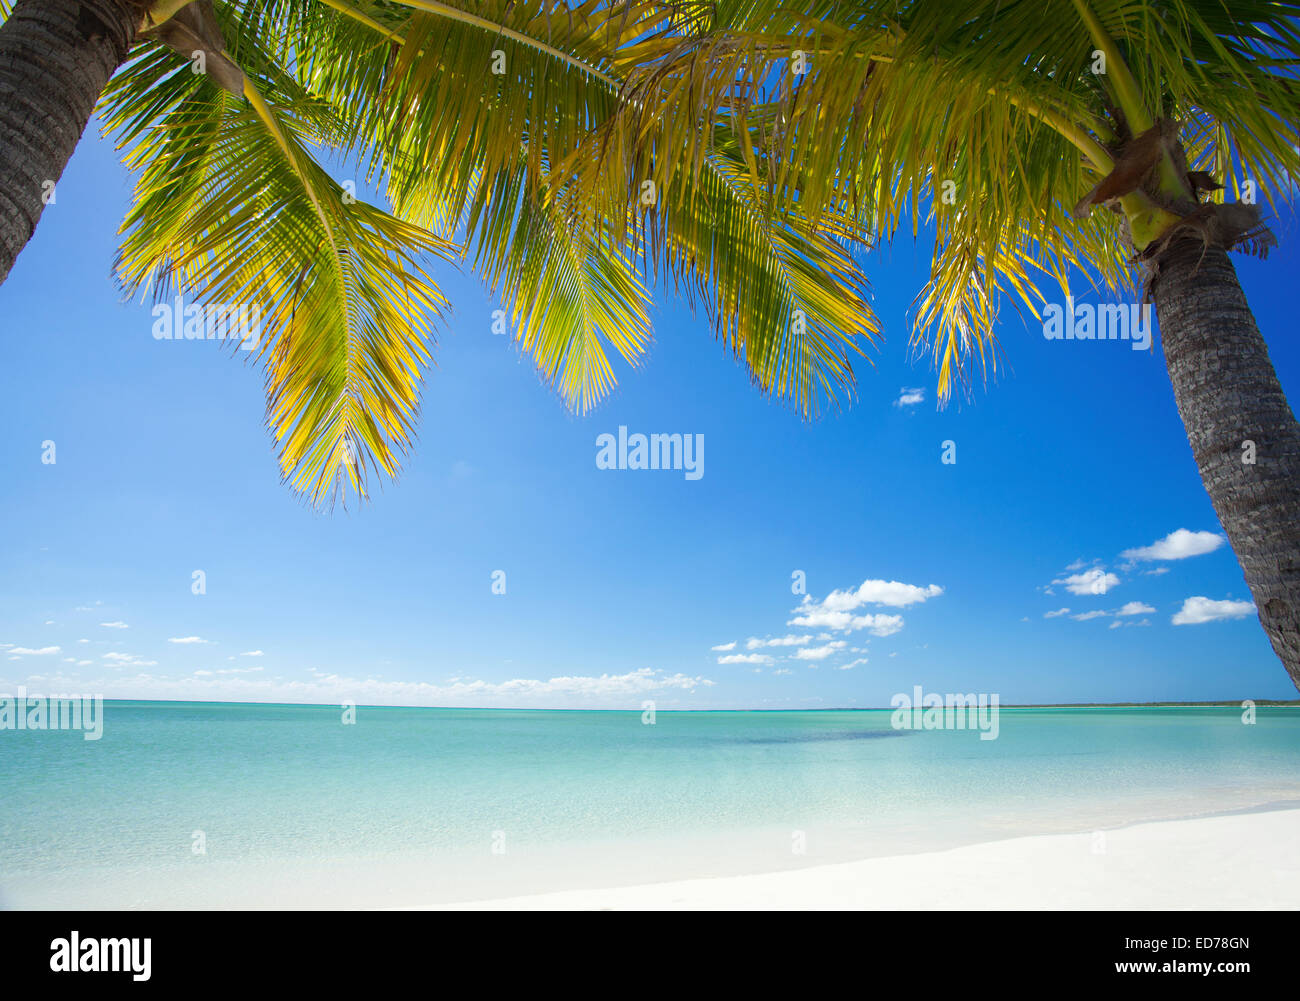 Palm trees on tropical beach in Abaco, Bahamas Stock Photo